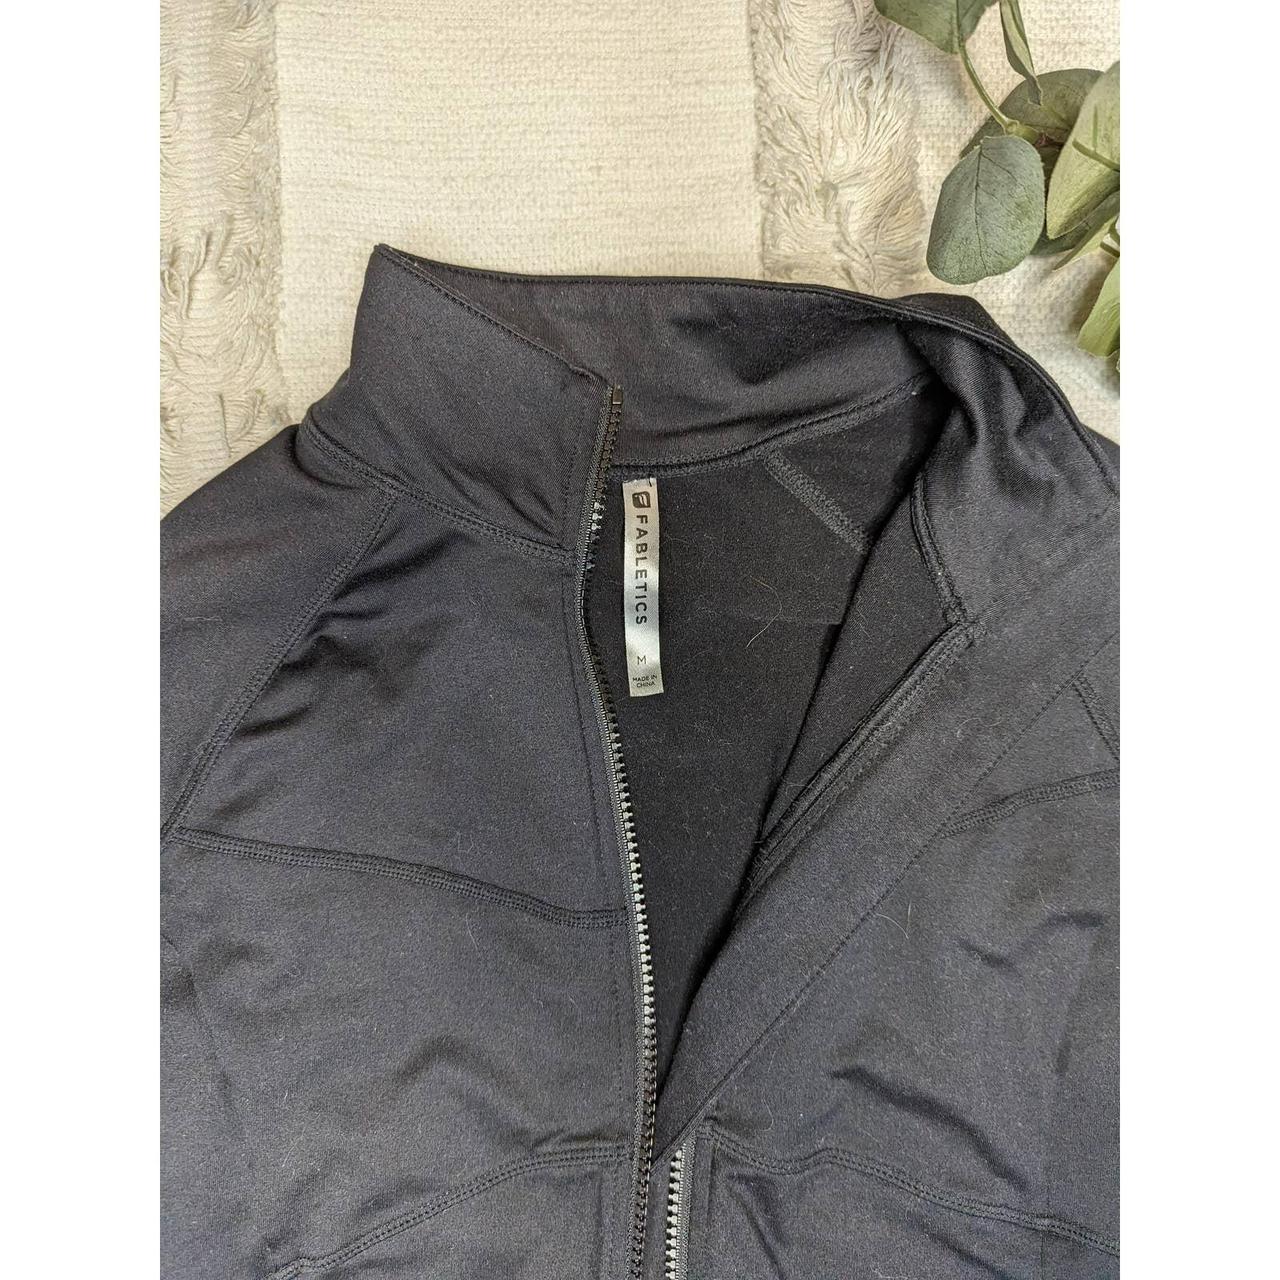 Super unique Fabletics jacket in black. Features - Depop